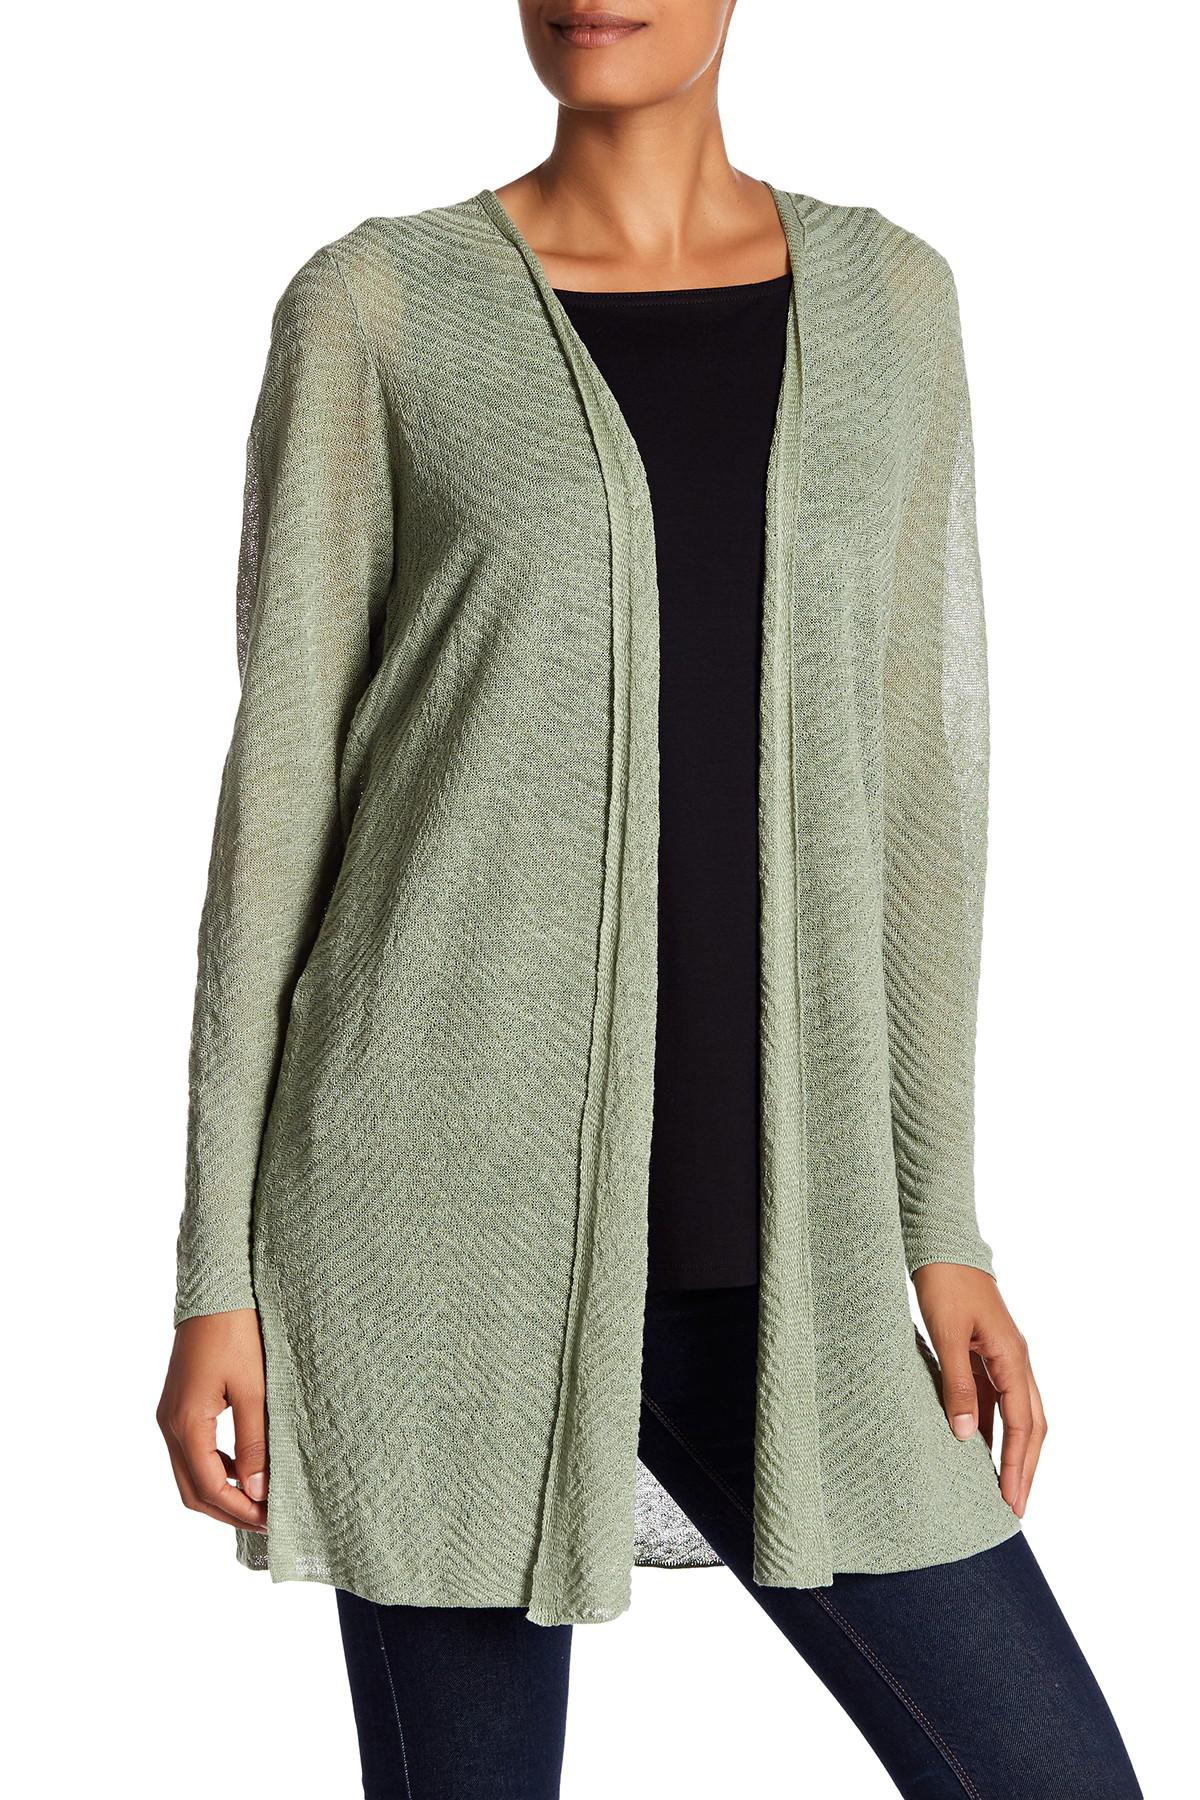 Lyst - Eileen Fisher Simple Knit Cardigan in Green